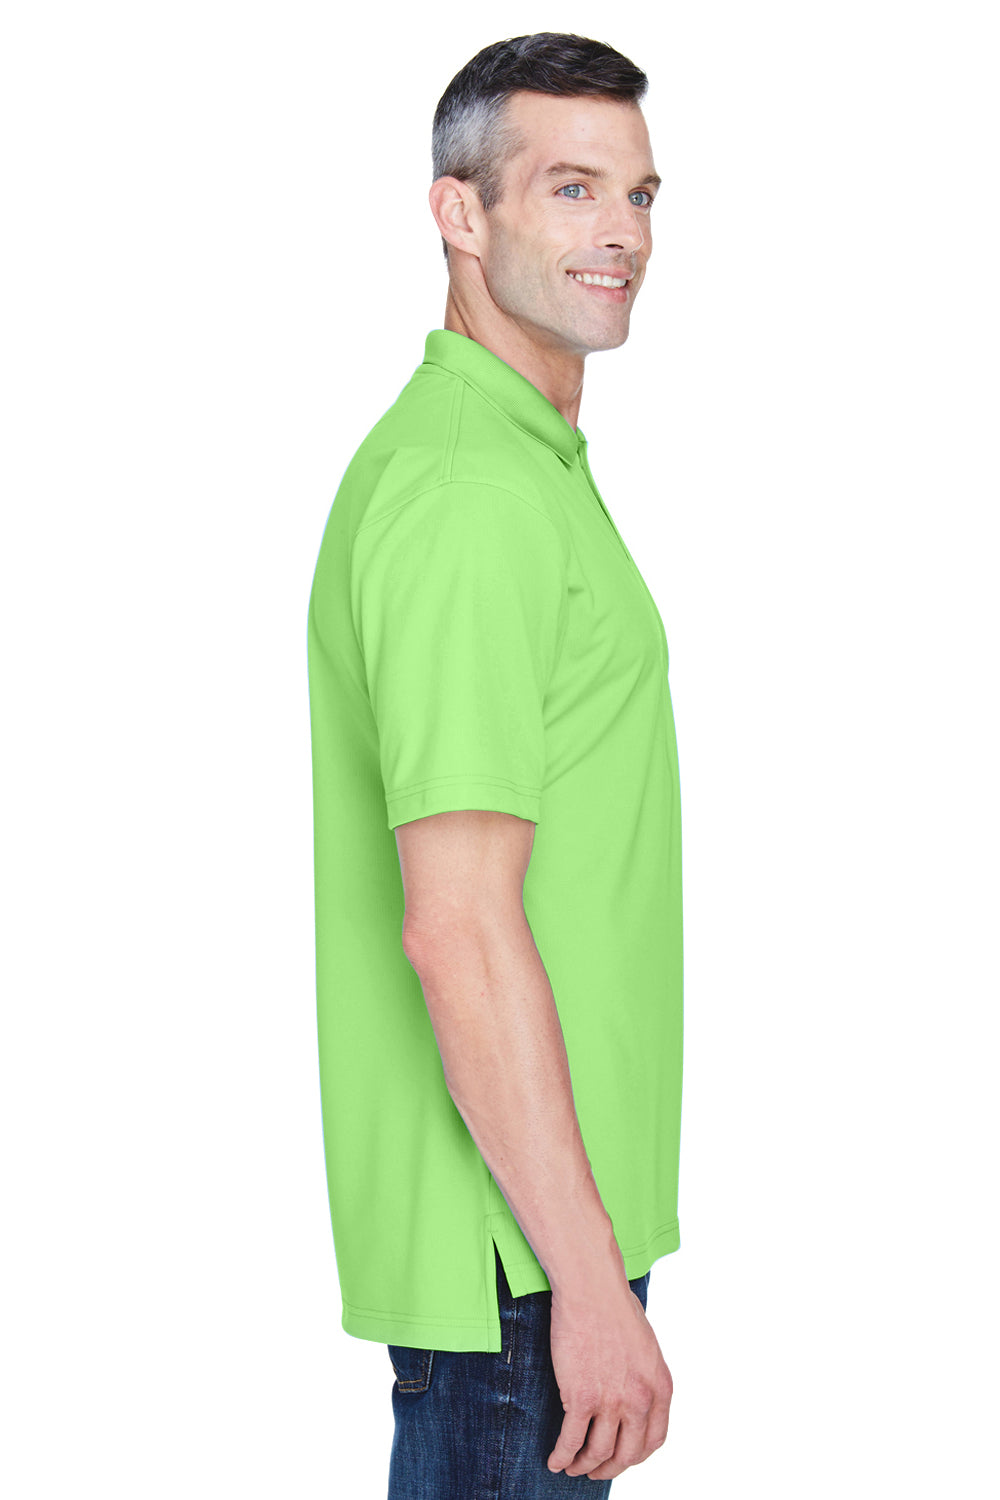 UltraClub 8445 Mens Cool & Dry Performance Moisture Wicking Short Sleeve Polo Shirt Light Green Side